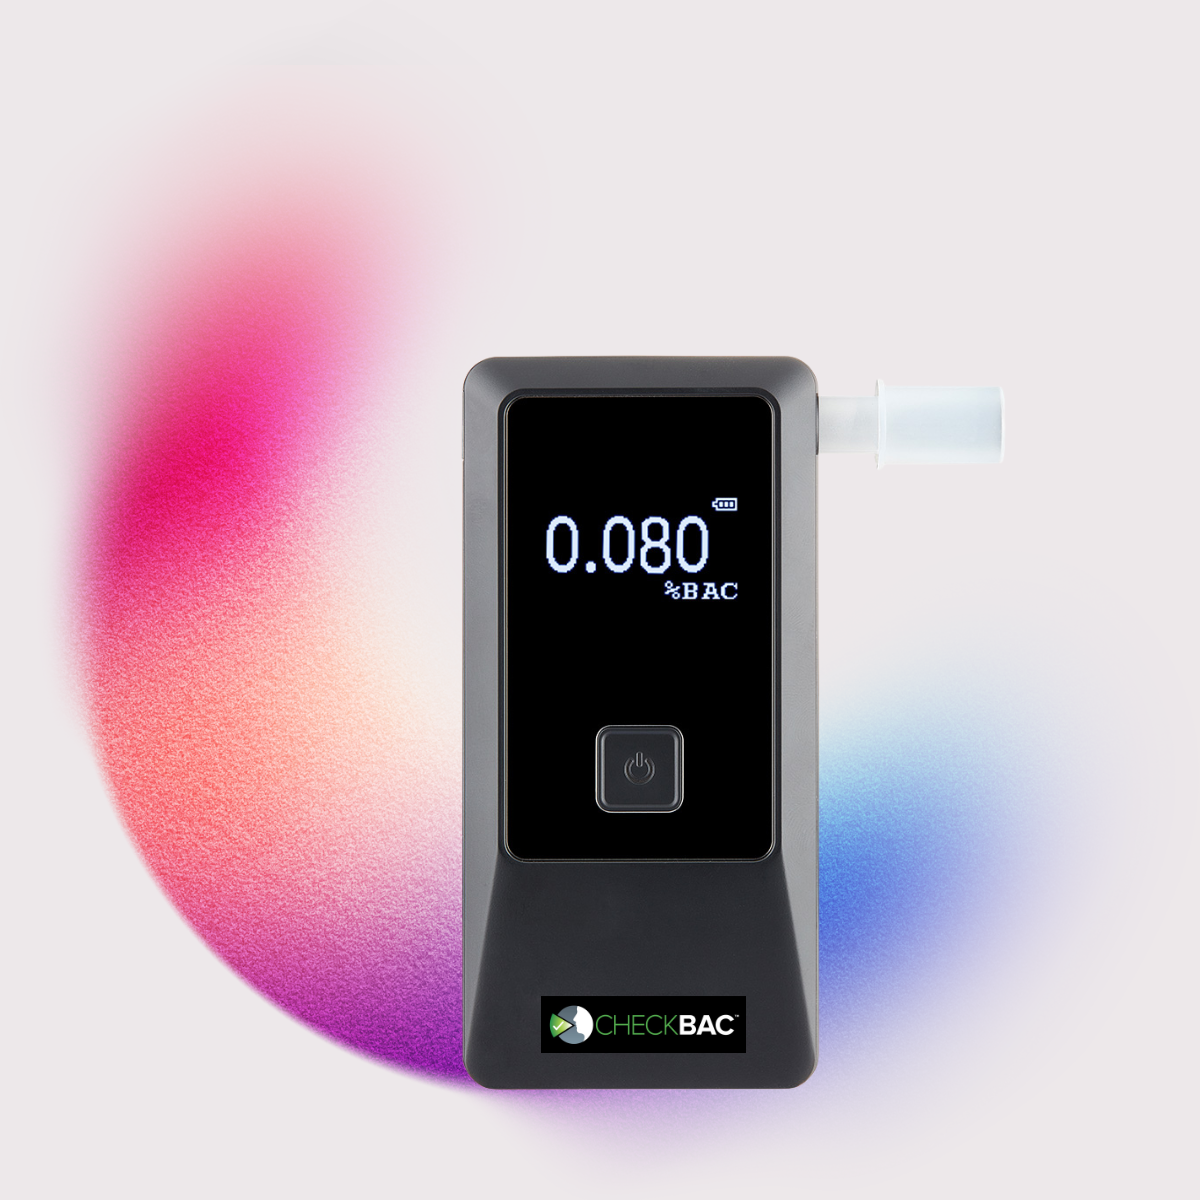 iSober70 Pro Evidential Bluetooth Breathalyzer